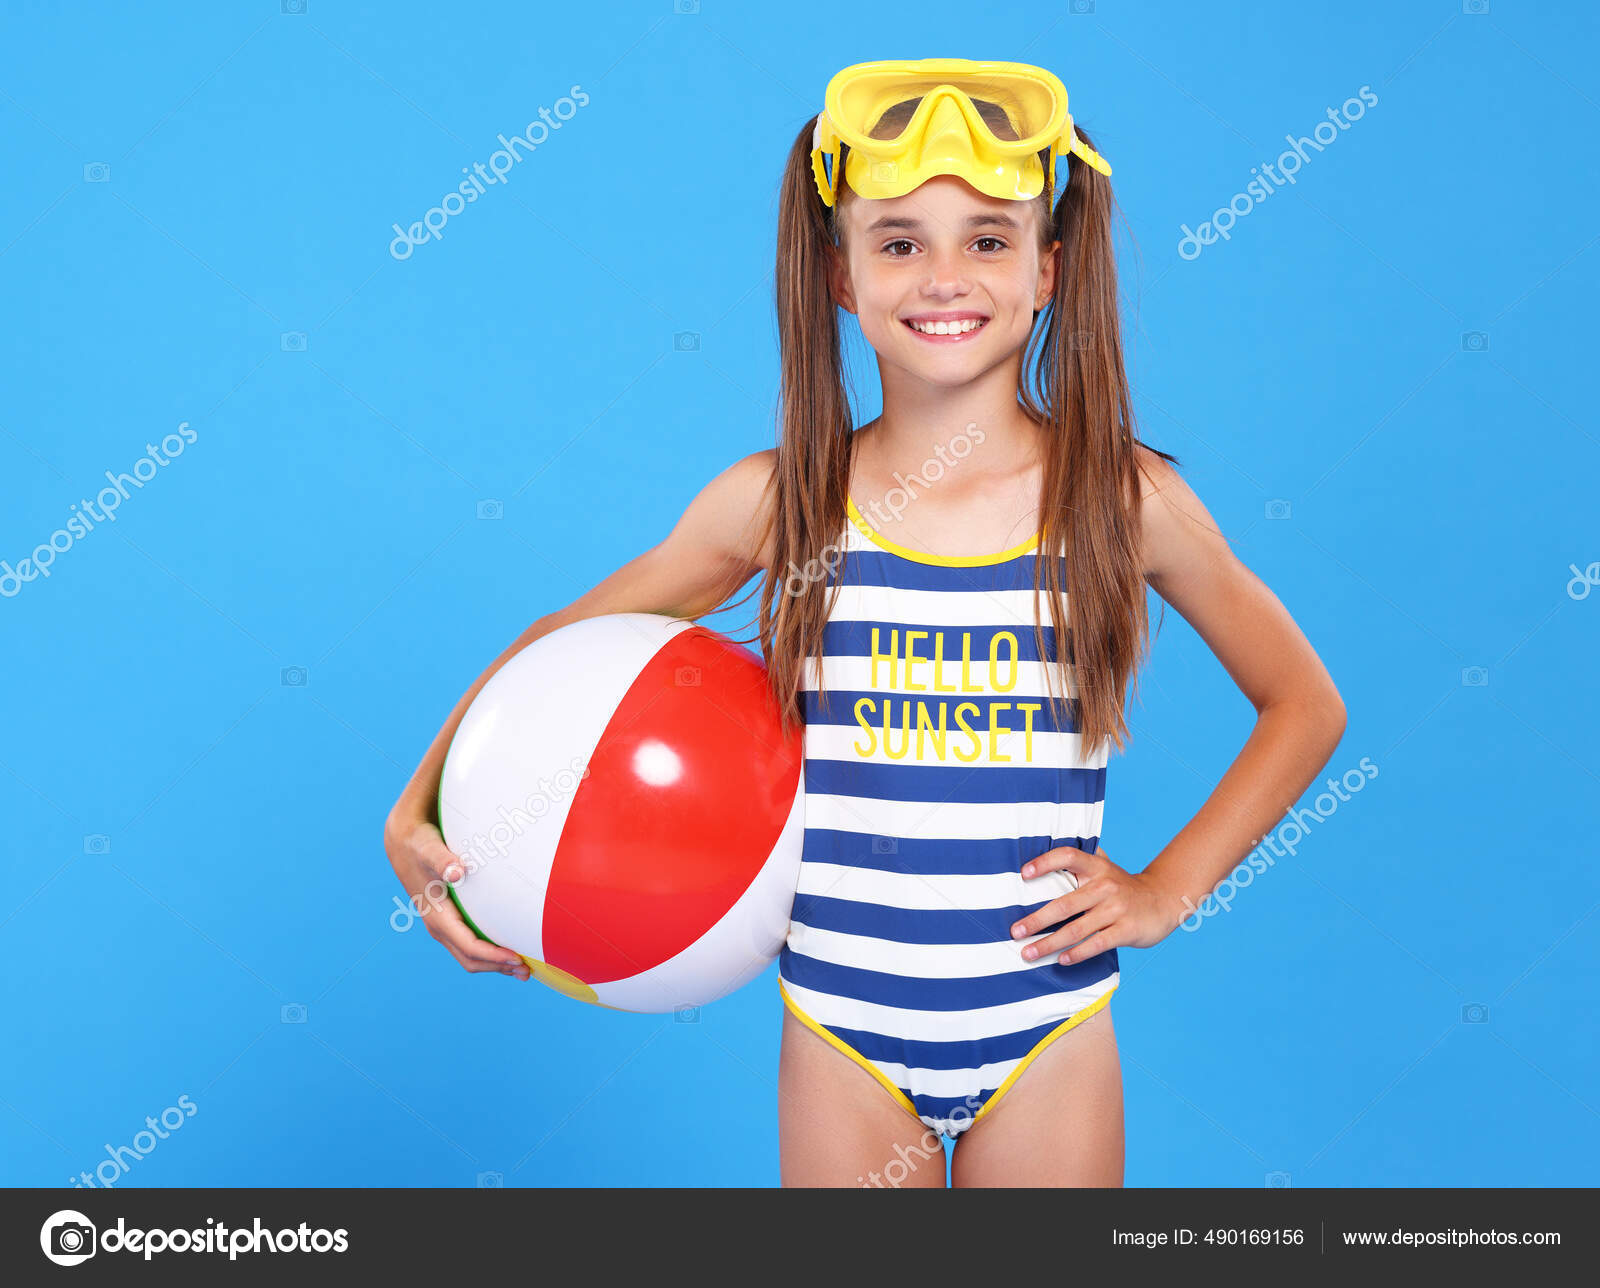 https://st2.depositphotos.com/1189140/49016/i/1600/depositphotos_490169156-stock-photo-smiling-joyful-girl-striped-swimsuit.jpg